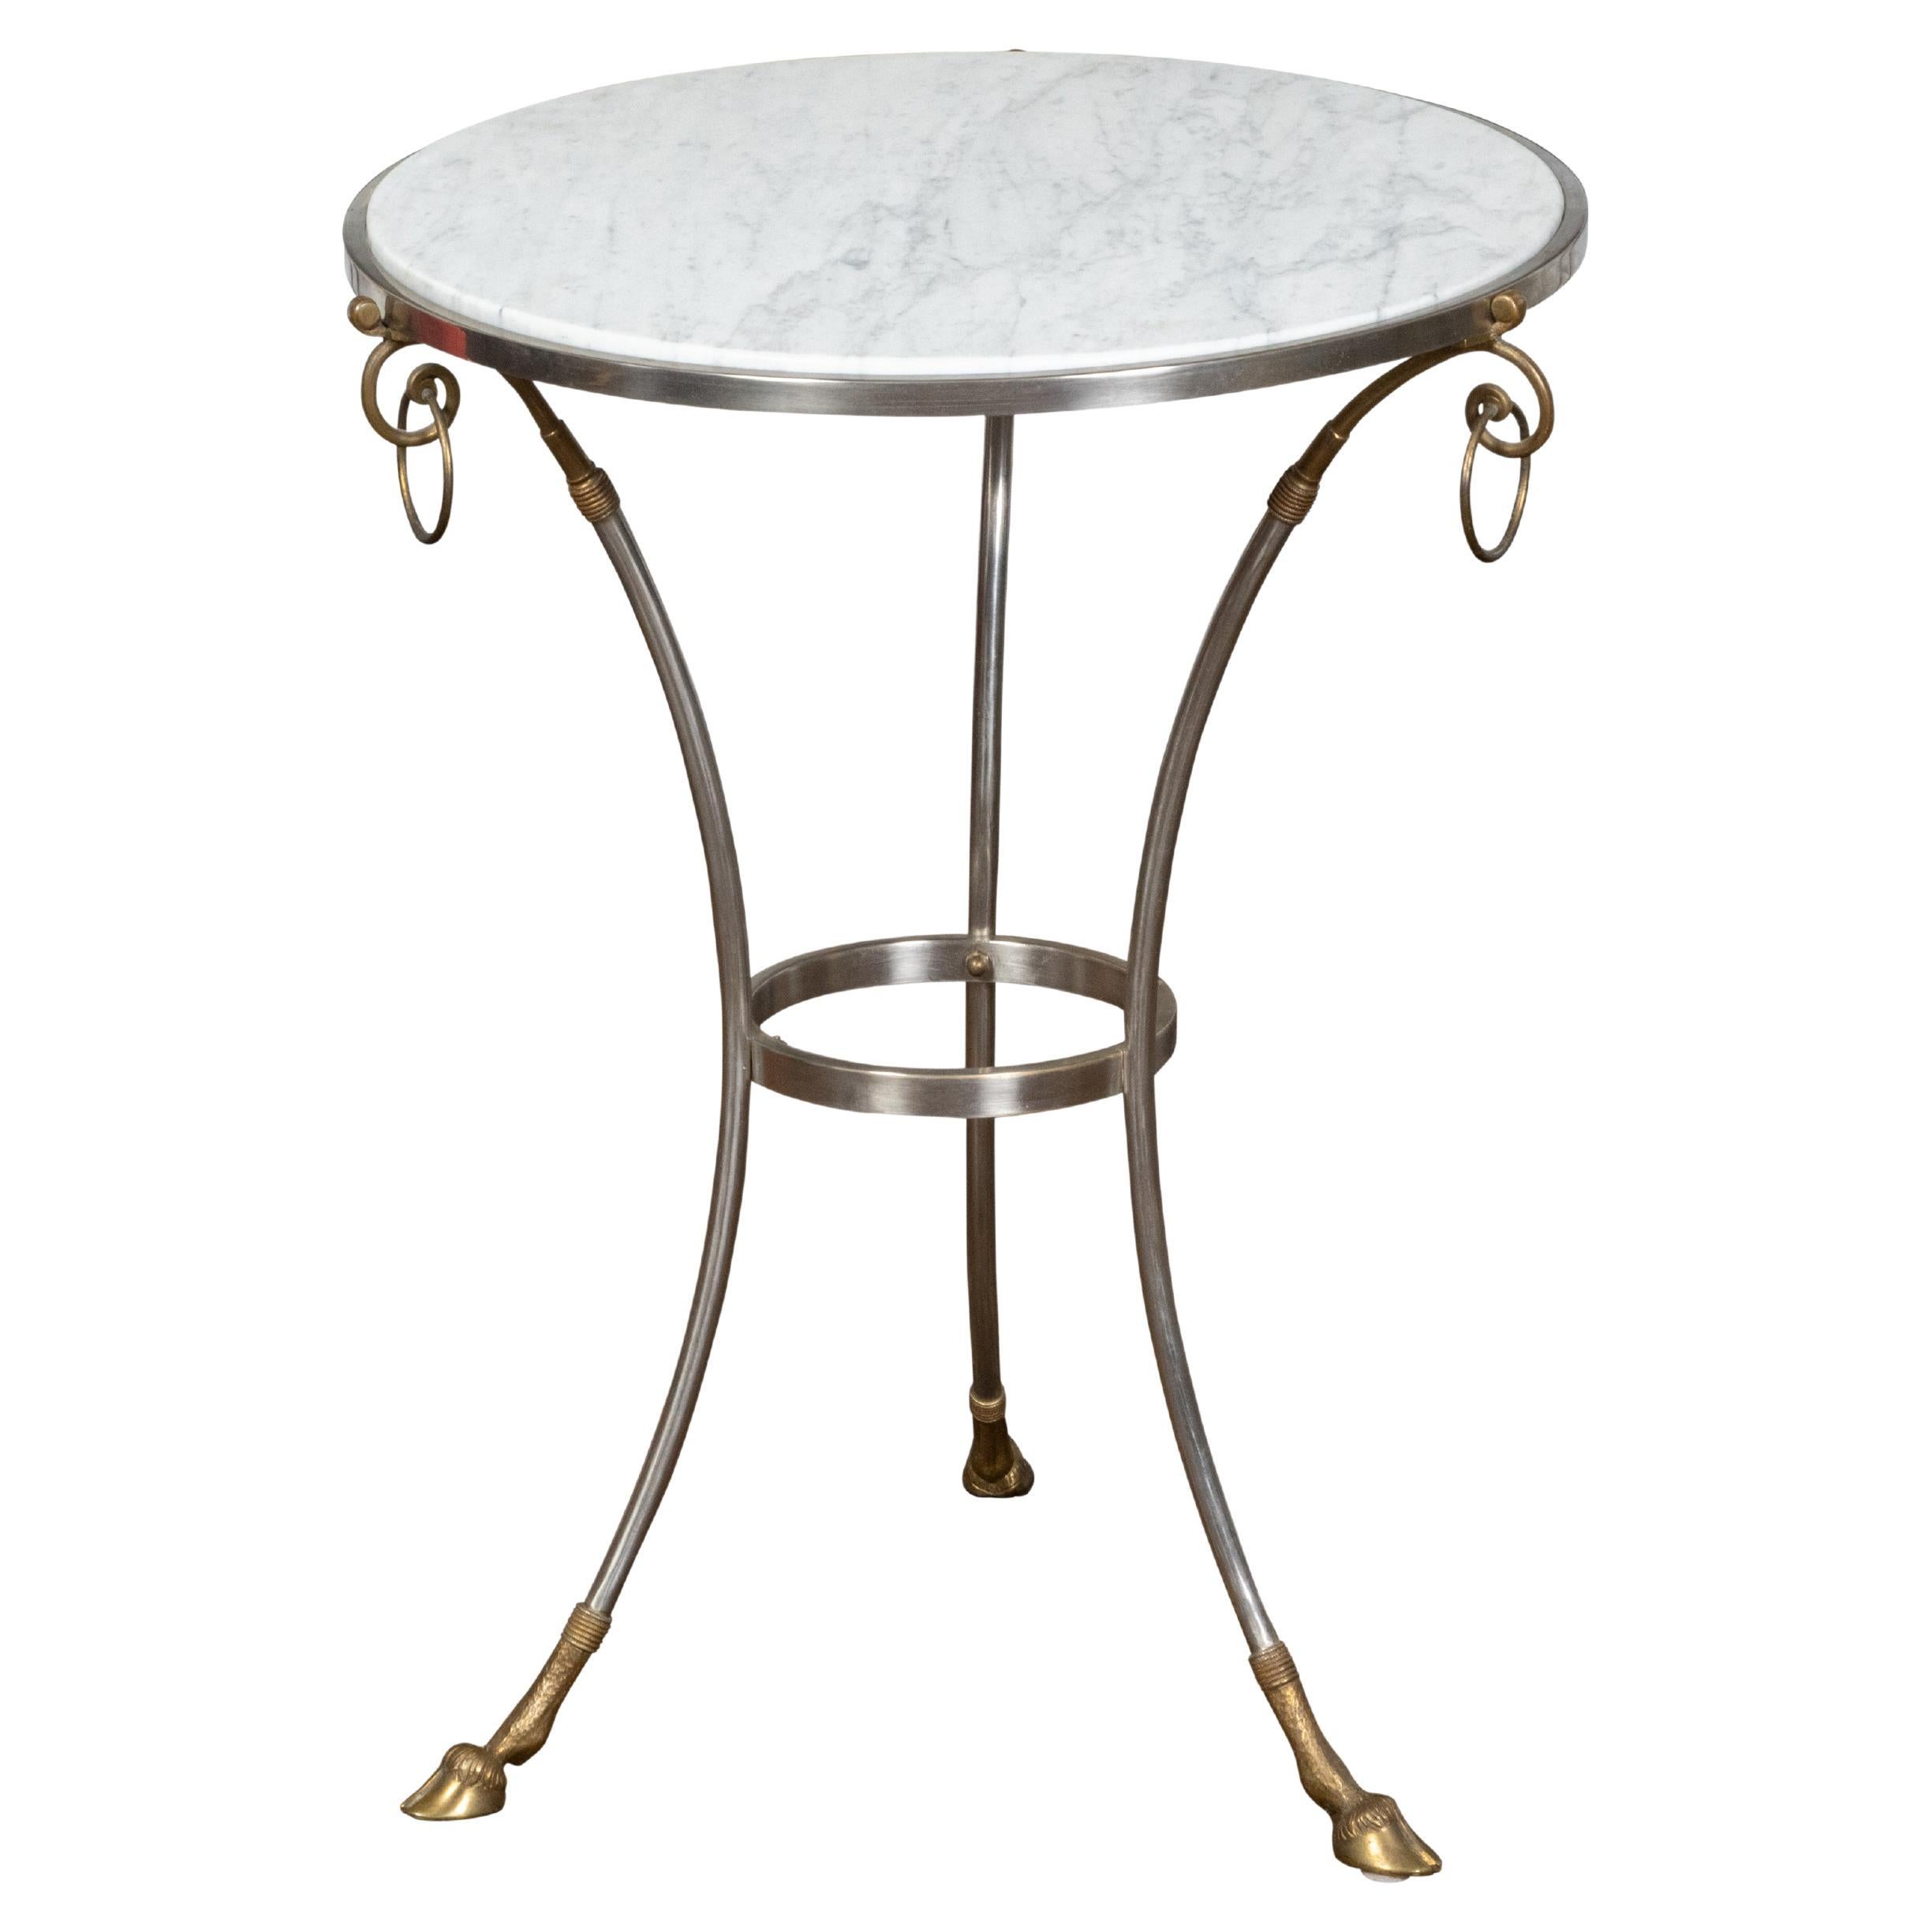 Maison Jansen Style Midcentury Italian Steel and Brass Table with Marble Top